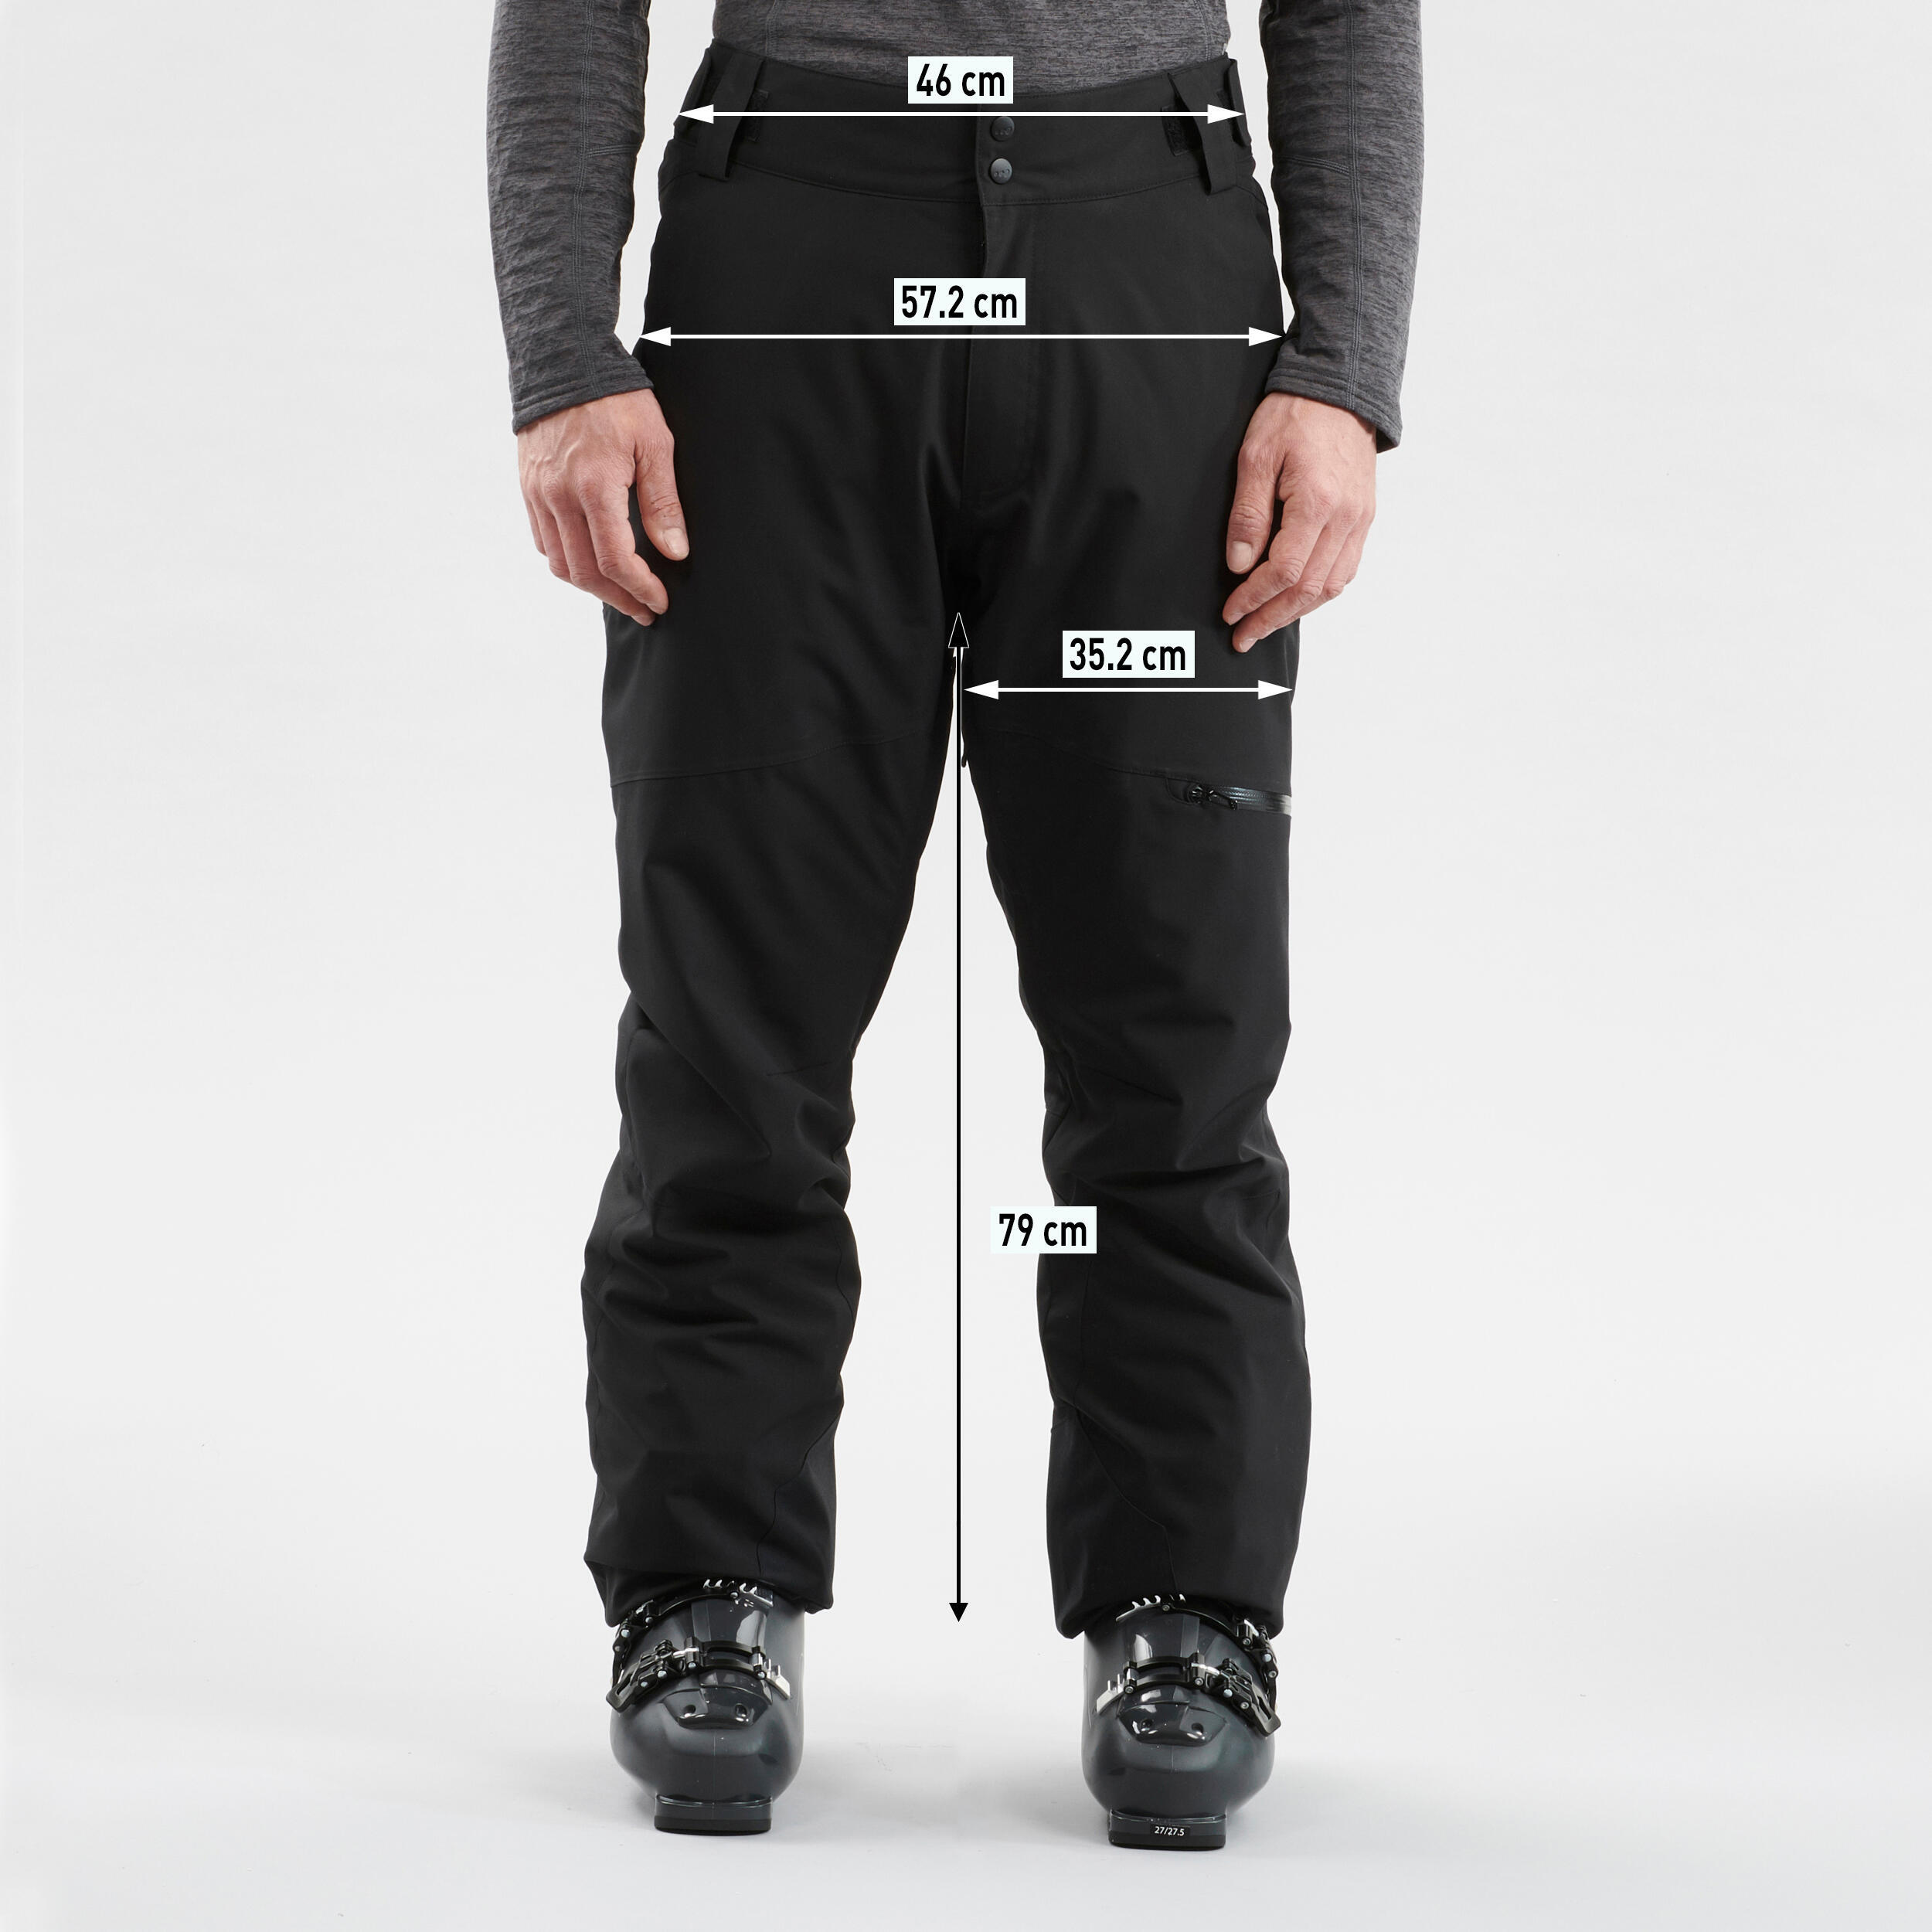 Men’s Warm Ski and Snowboarding Trousers Regular 500 - Black 9/9